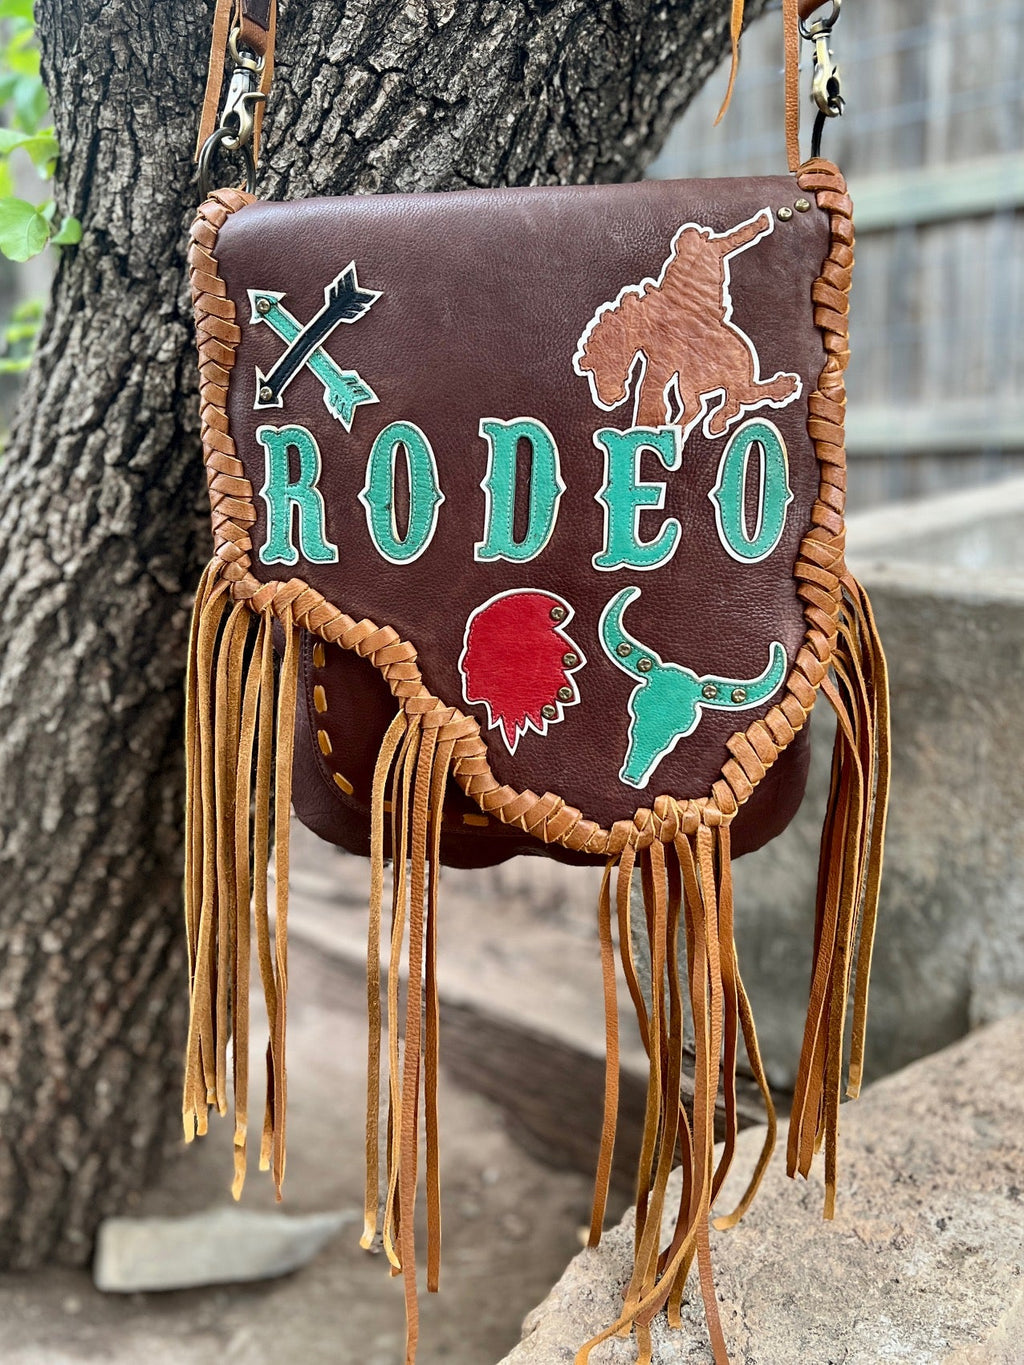 Darling 90's Rodeo Bag | gussieduponline